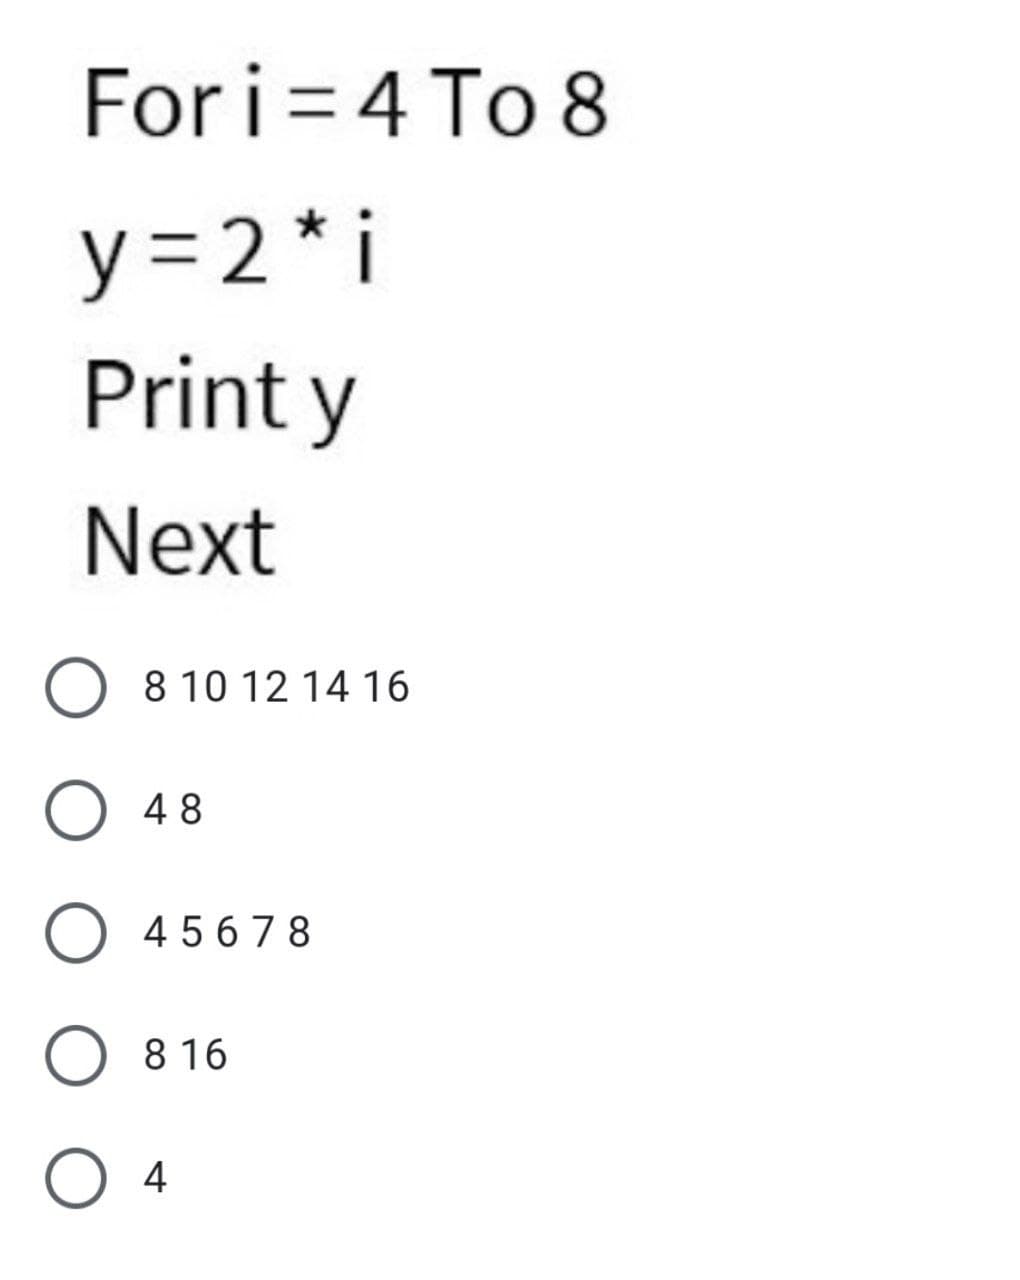 Fori= 4 To 8
y=2 * i
Print y
Next
8 10 12 14 16
48
4 5 6 7 8
8 16
4
